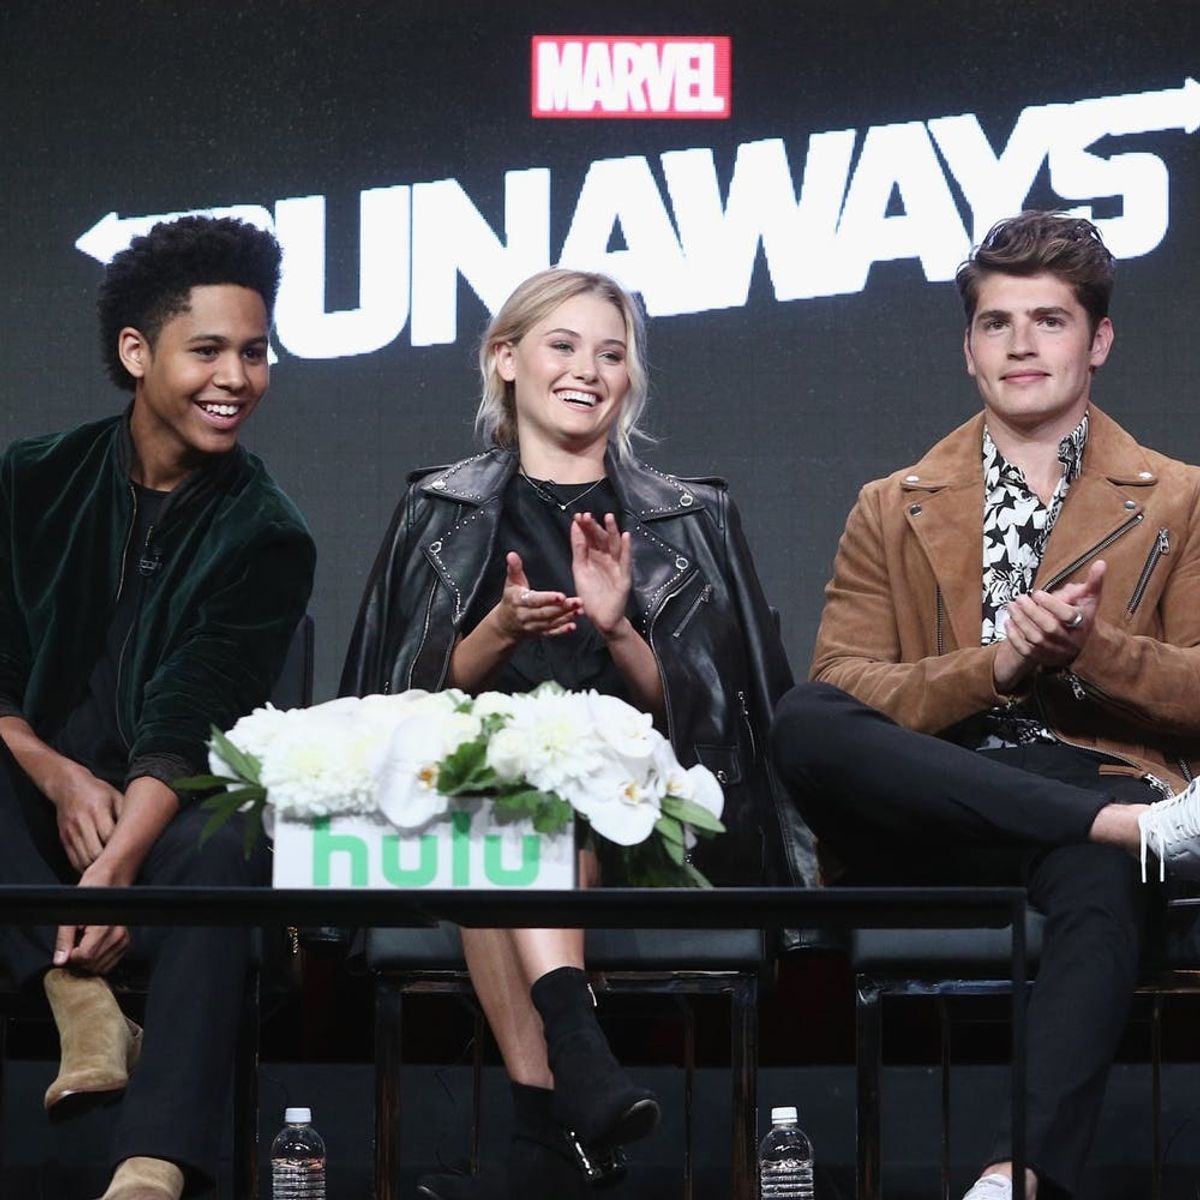 See the First Trailer for Marvel’s Teenage Superhero Series “Runaways”